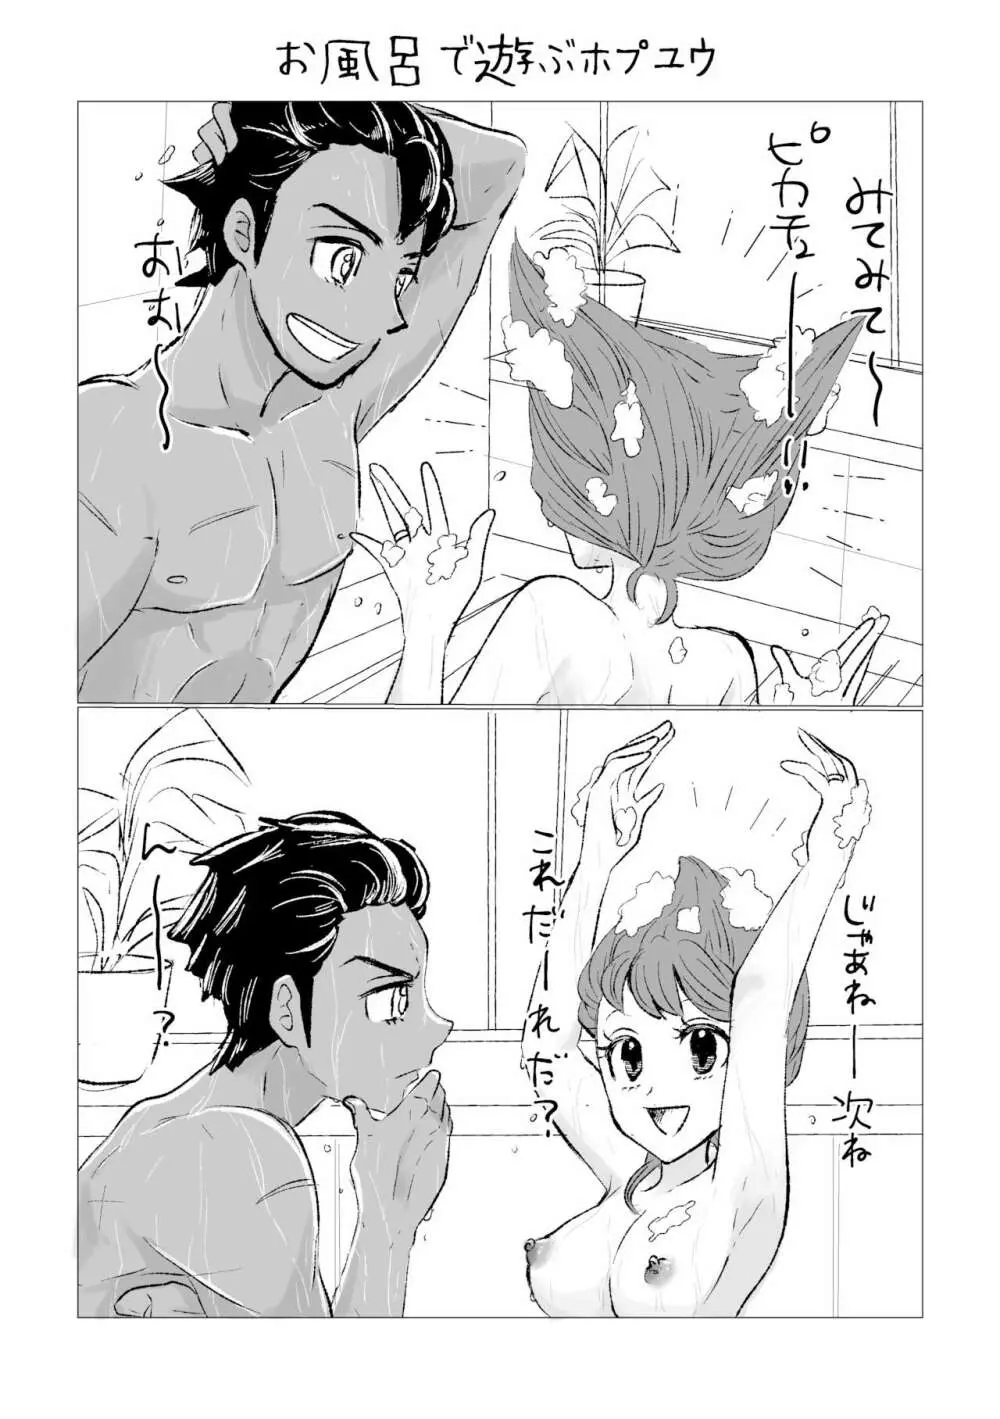 Chotto etchina hopuyuu manga-dzume - page4